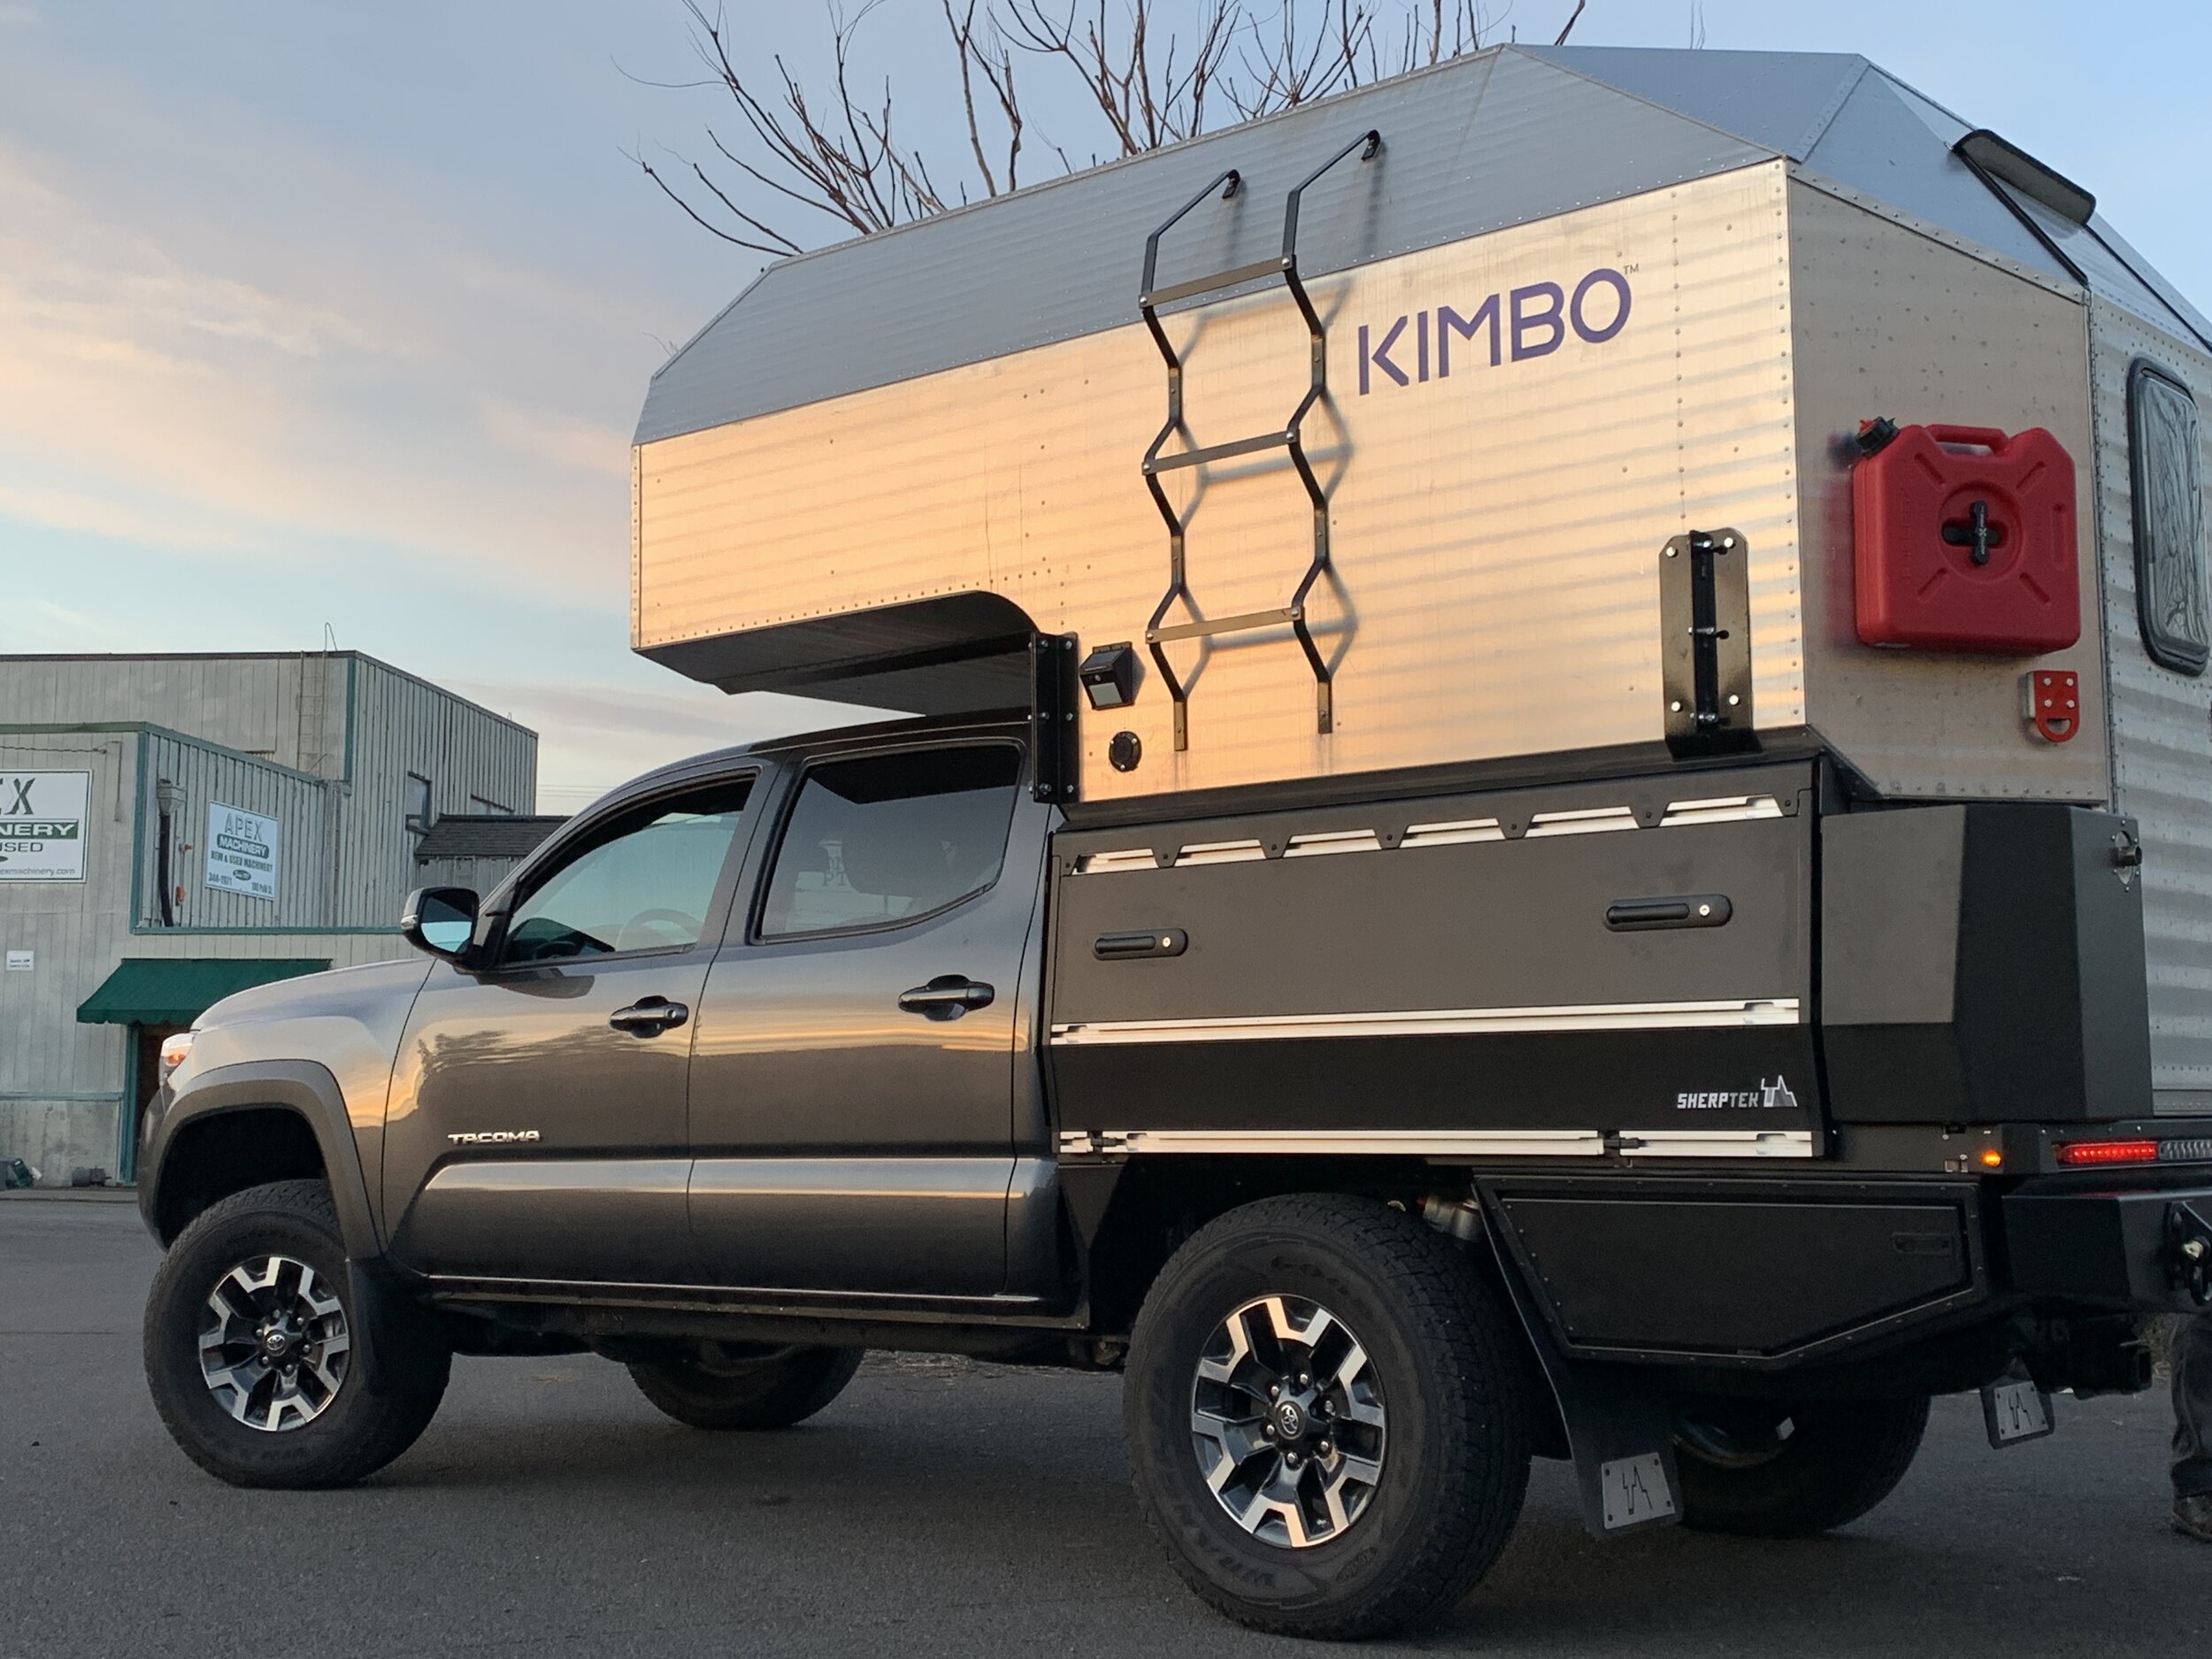 SherpTek system for Toyota Tacoma + Kimbo